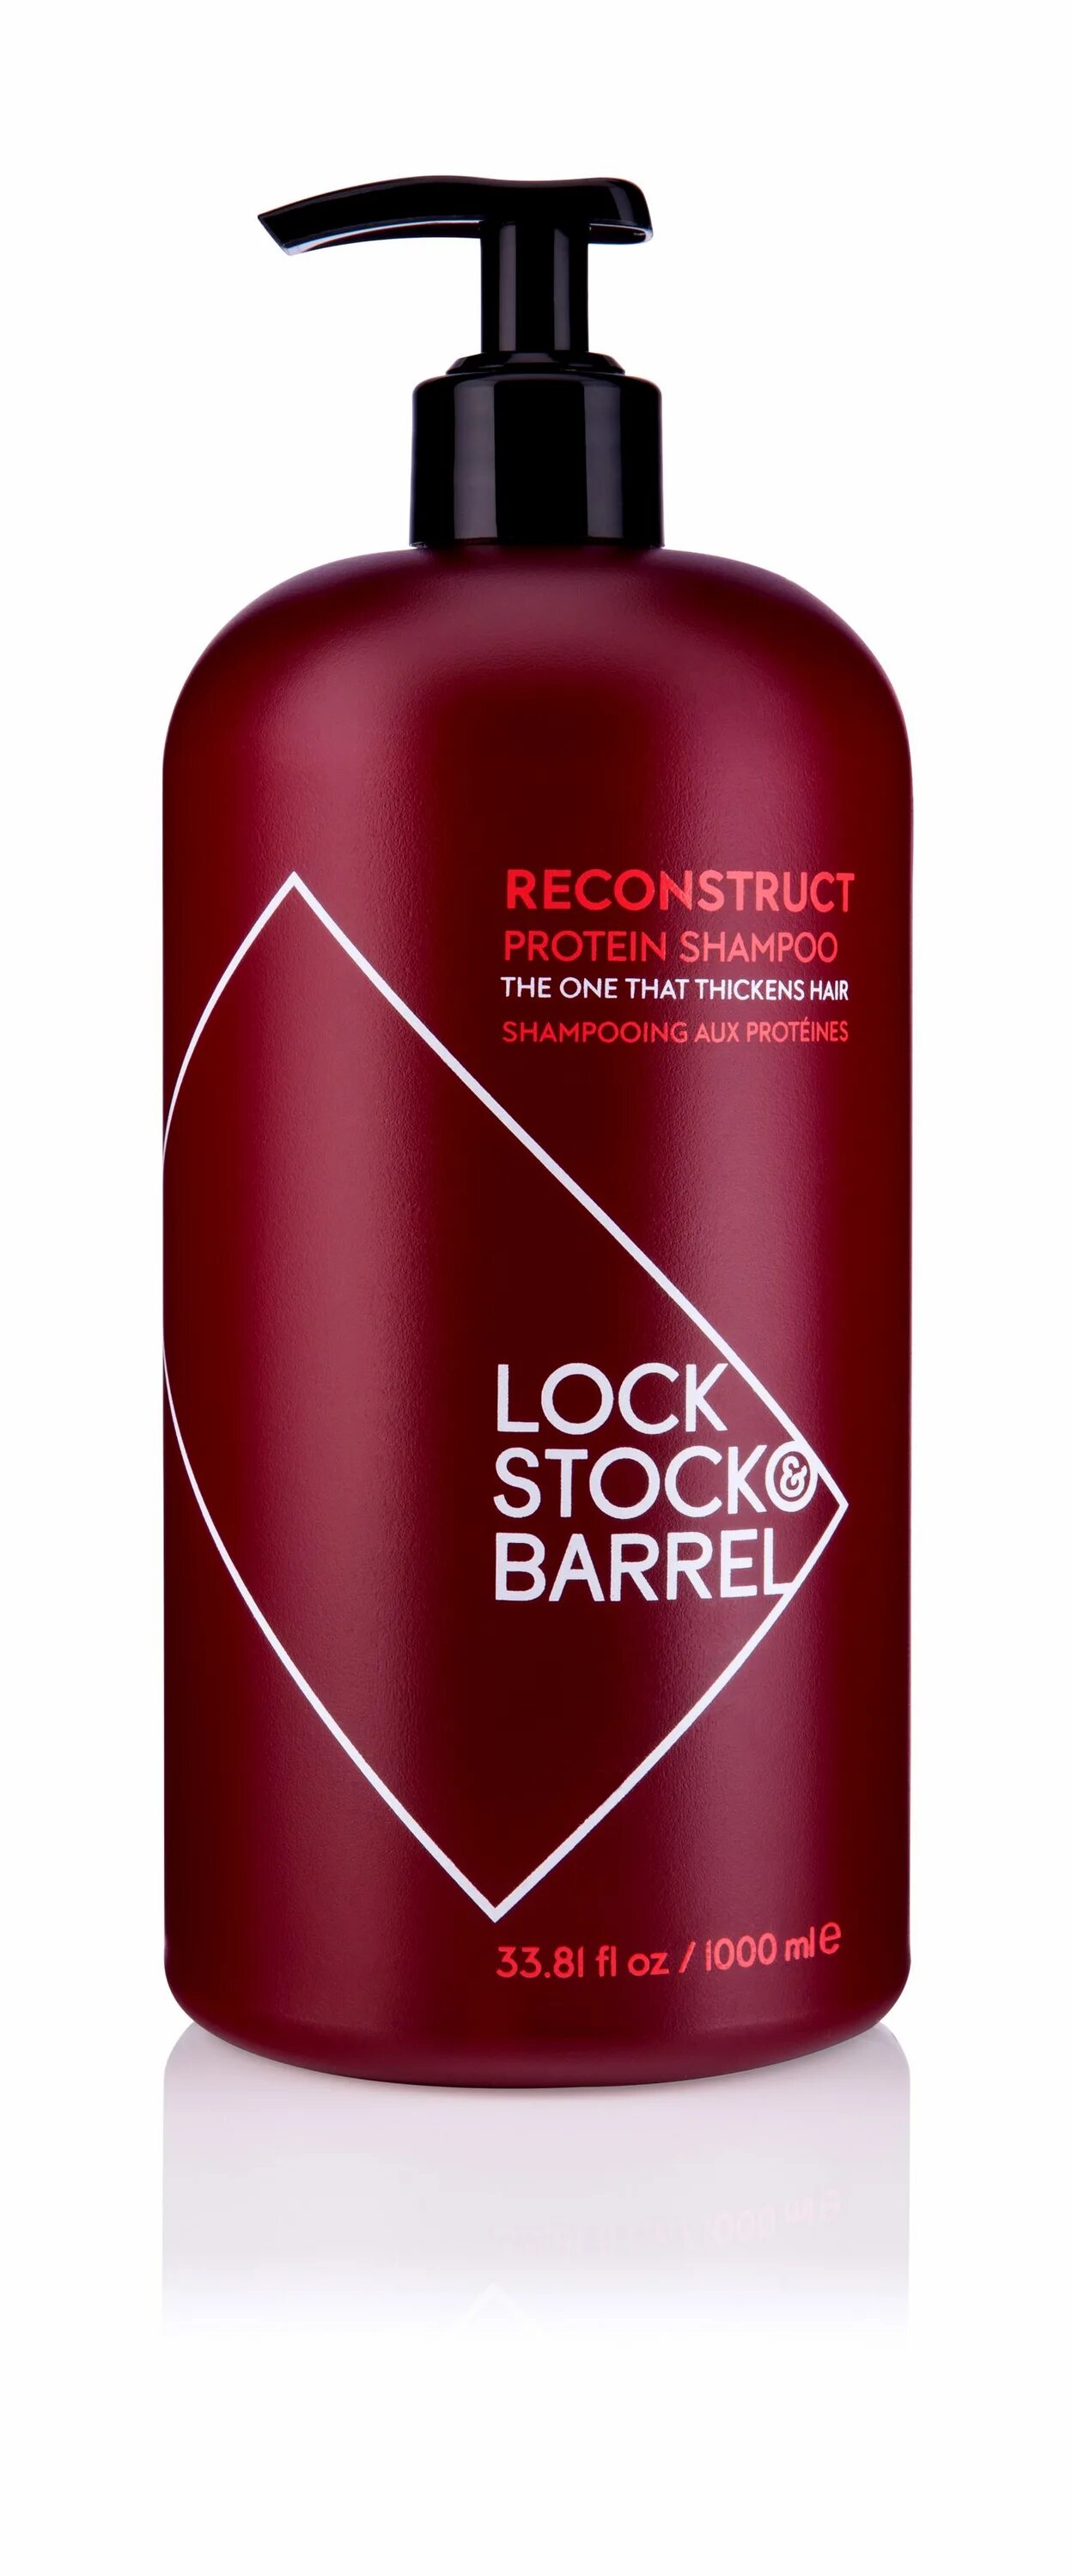 Lock stock Barrel шампунь Recharge. Lock stock & Barrel reconstruct шампунь для тонких волос 1000мл. Lock stock Barrel шампунь 1000 мл. Lock stock & Barrel шампунь Recharge Moisture, 1000 мл.